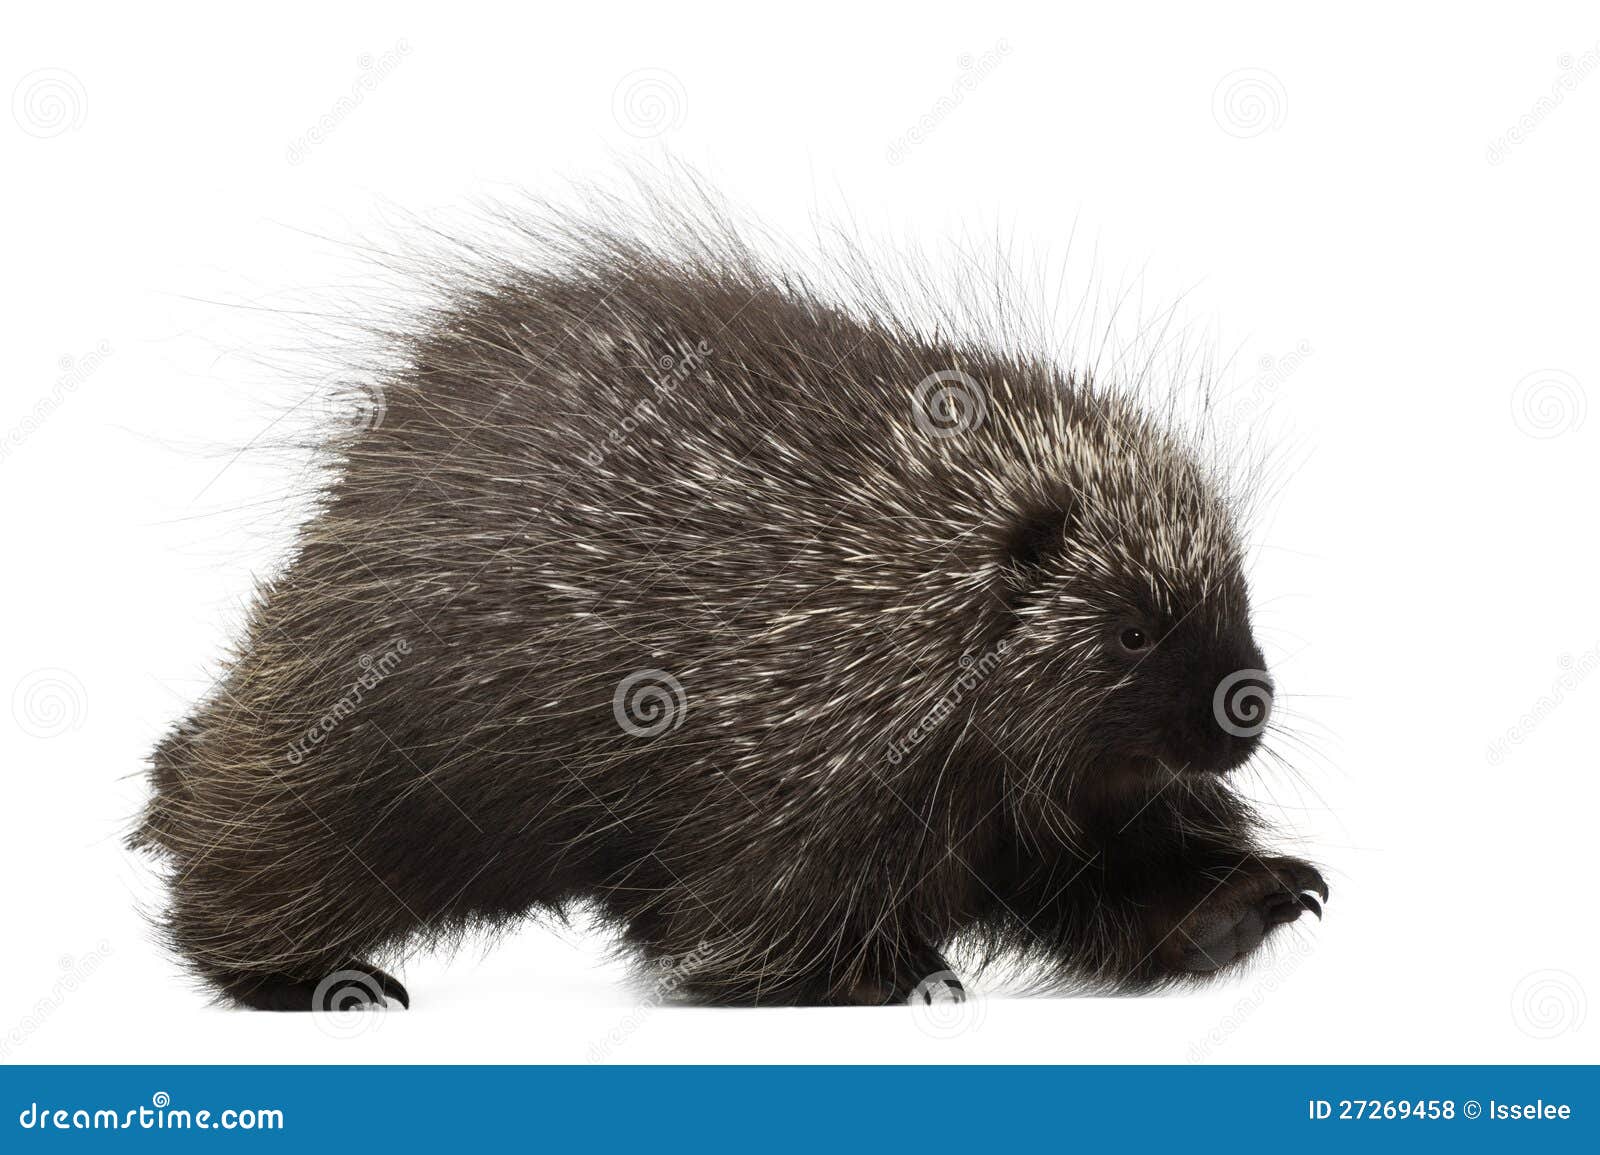 north american porcupine walking